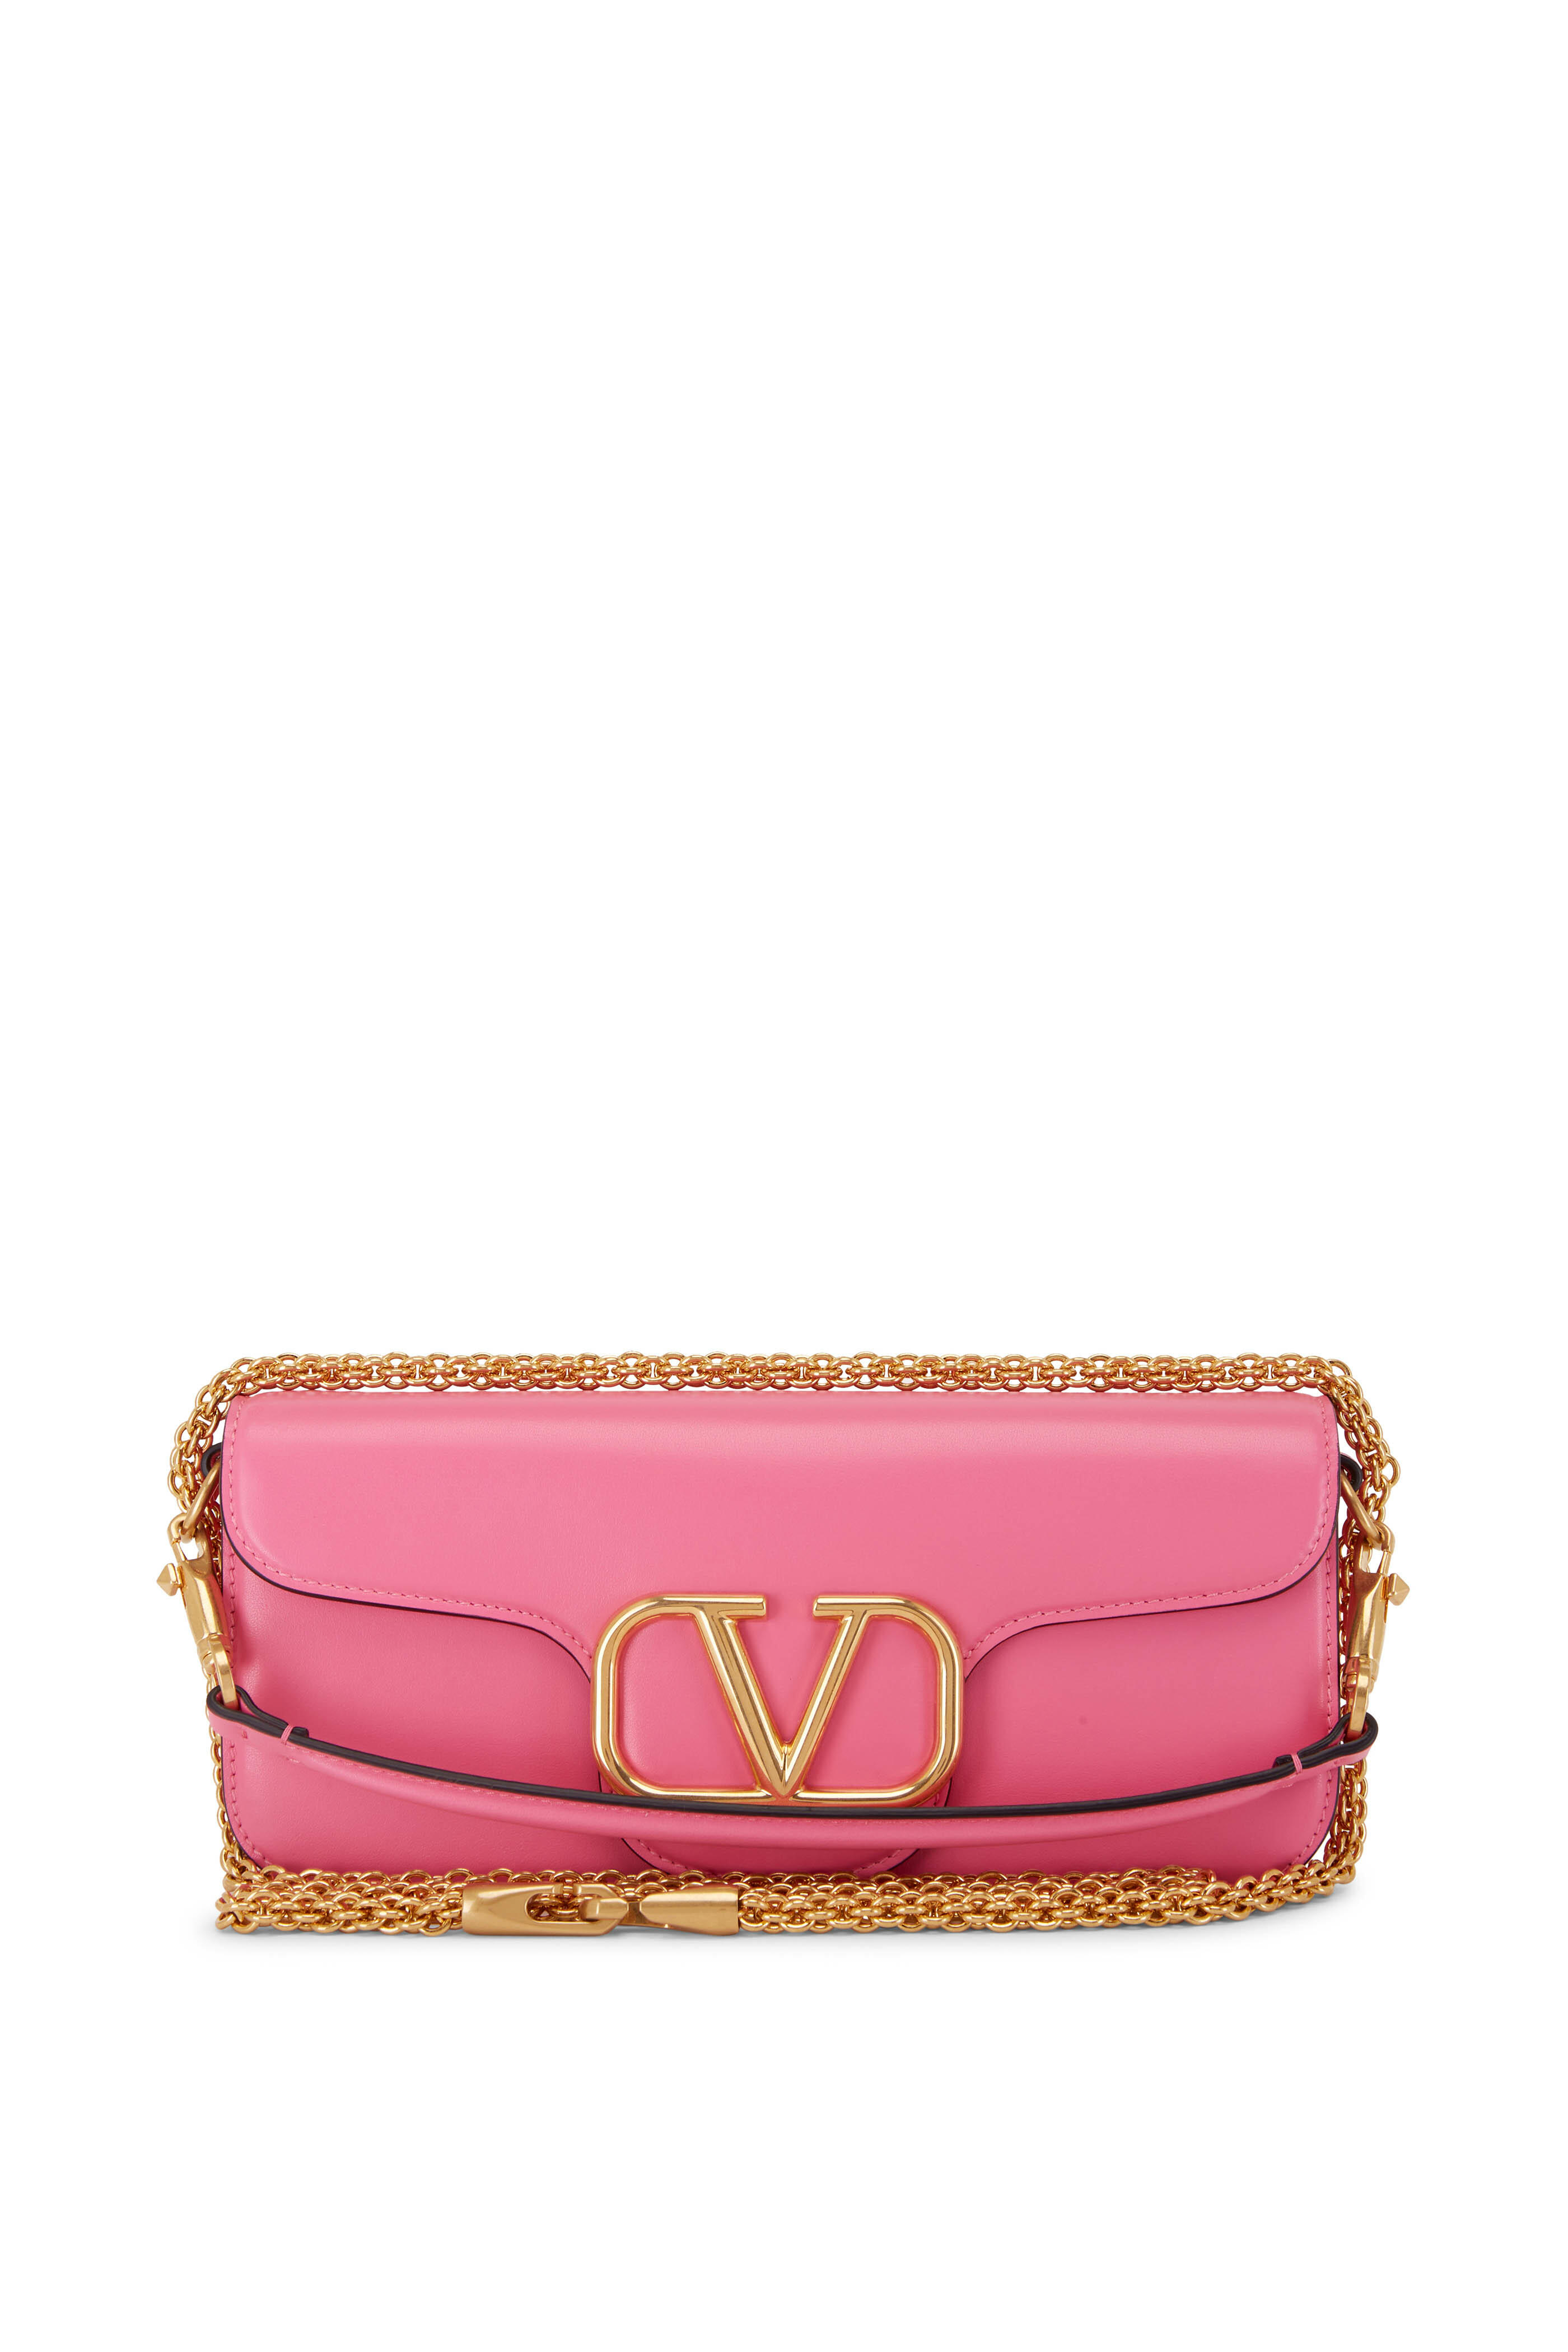 Valentino Garavani Vlogo Signature Shoulder Bag - Pink